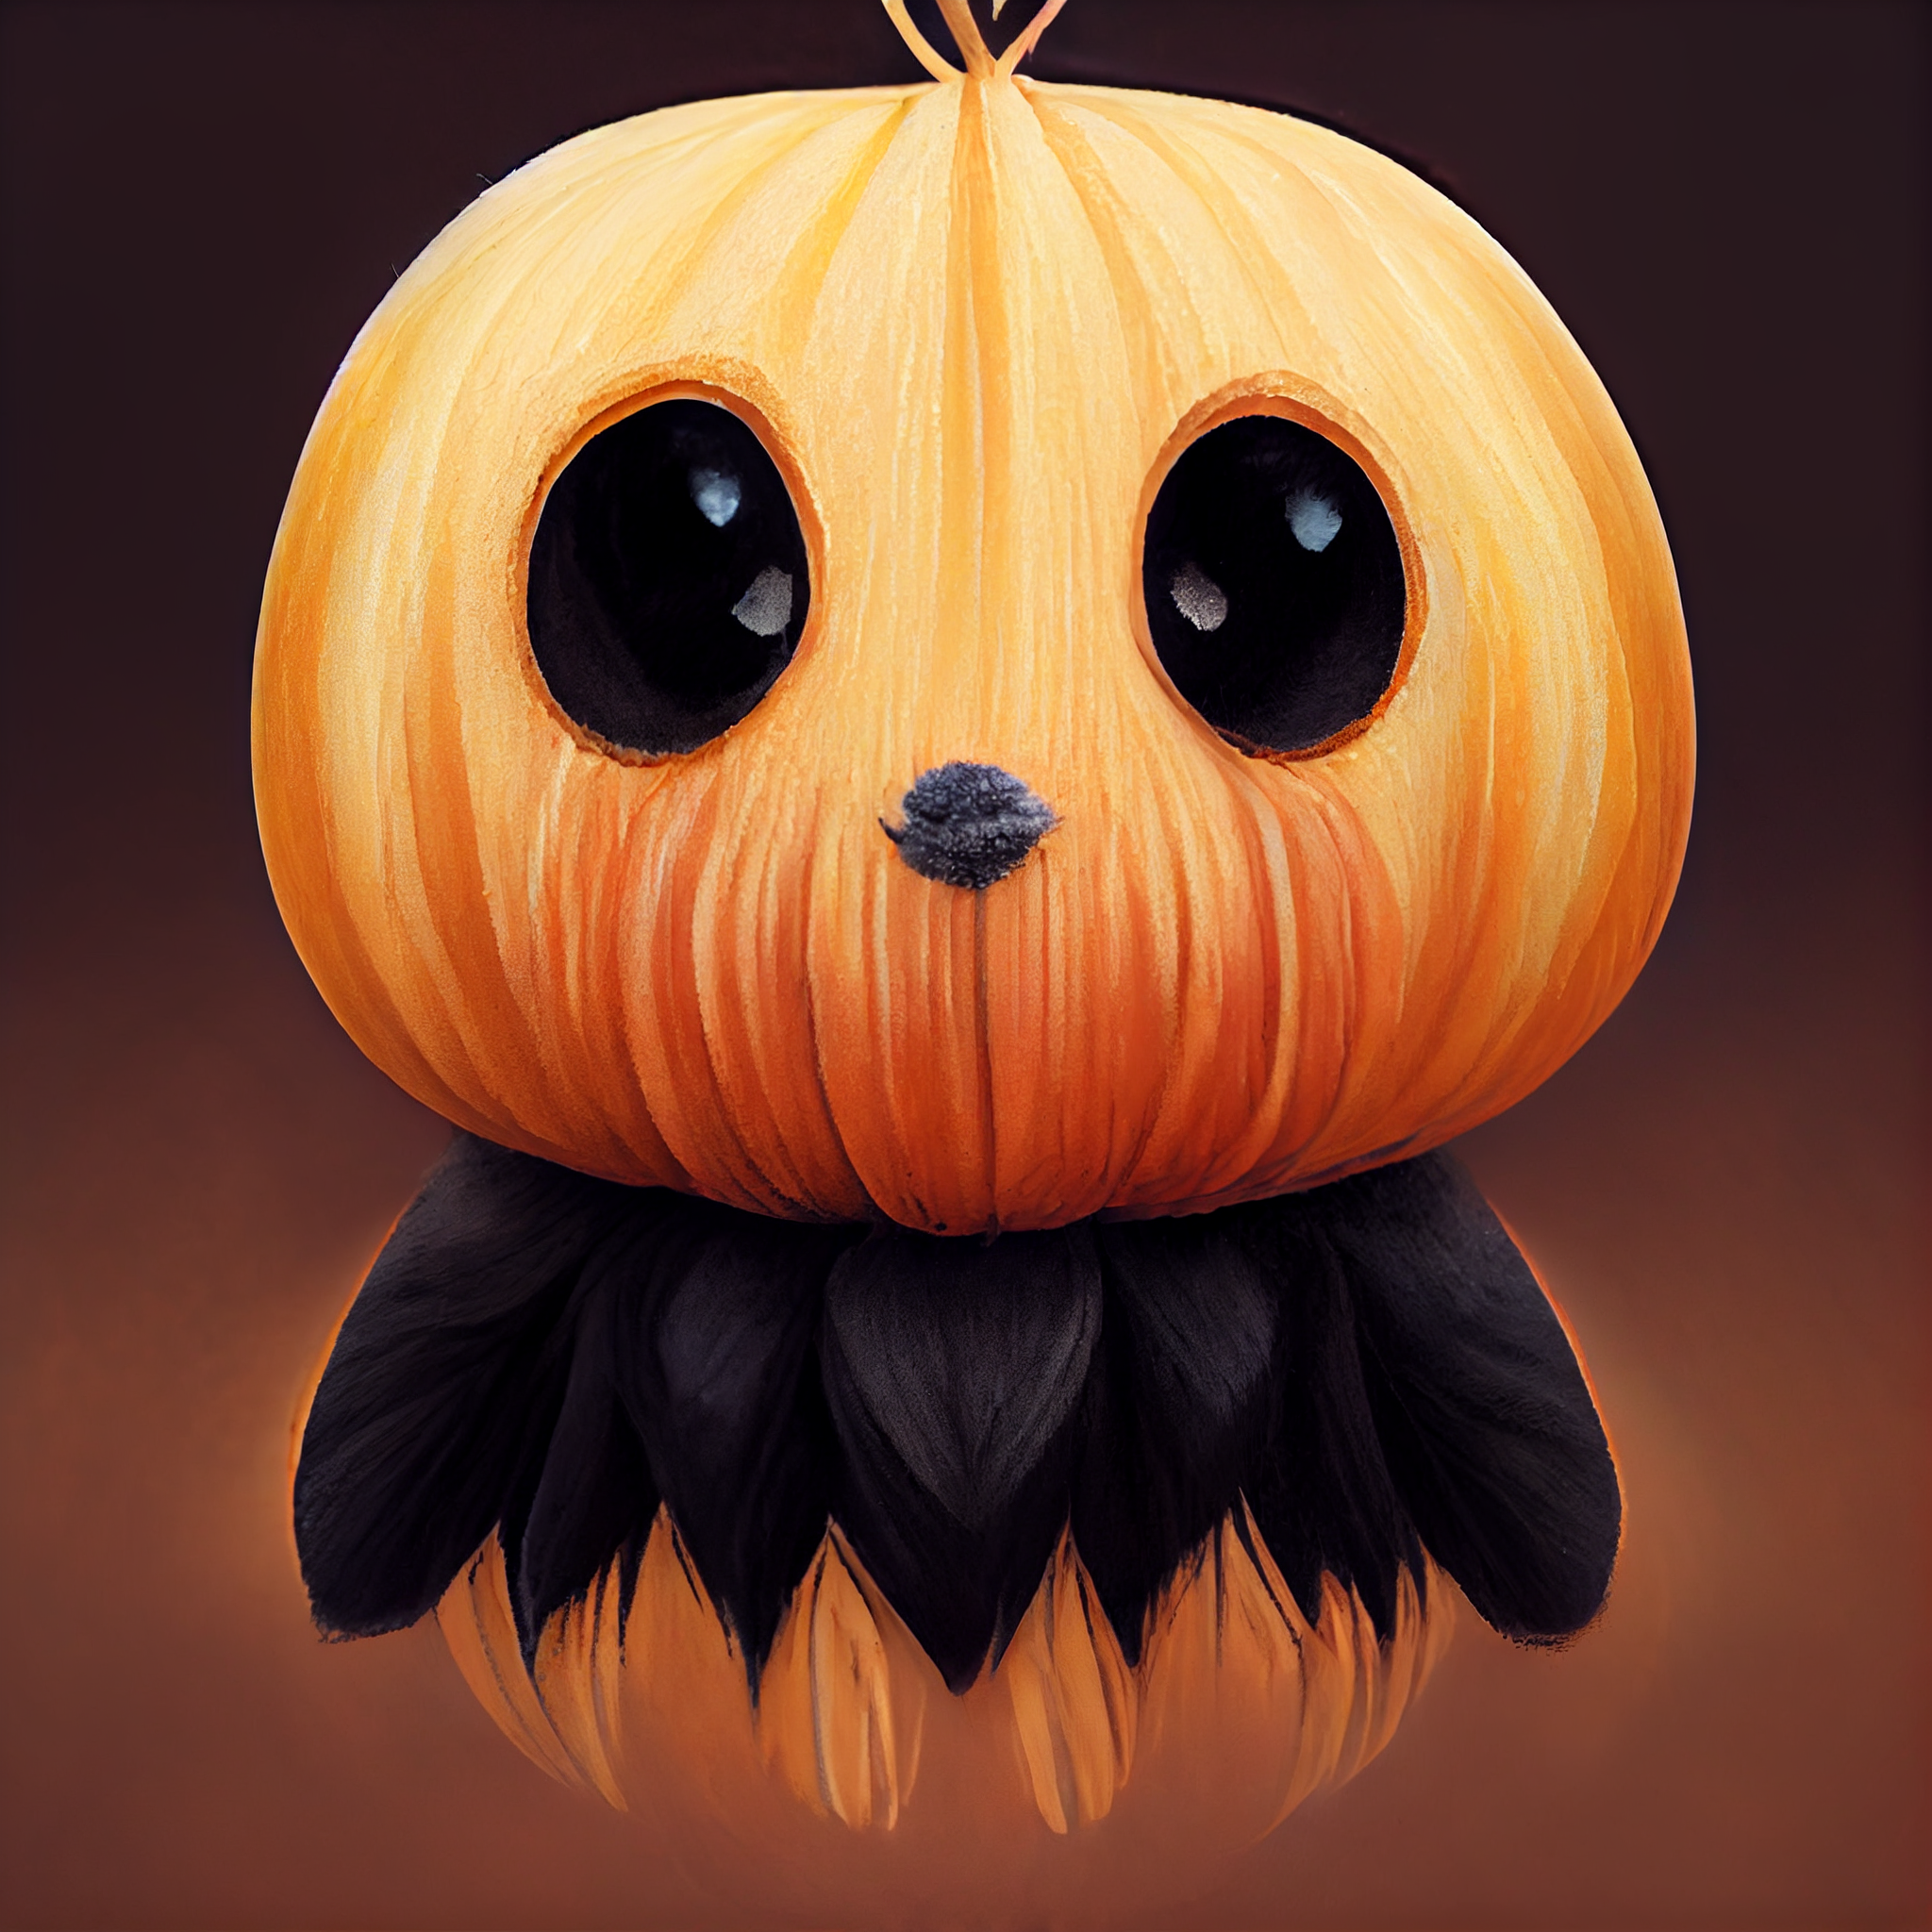 midjourney/bbbbbbbbrie_fluffy_black_pumpkin_halloween_cute_upscaled00.png